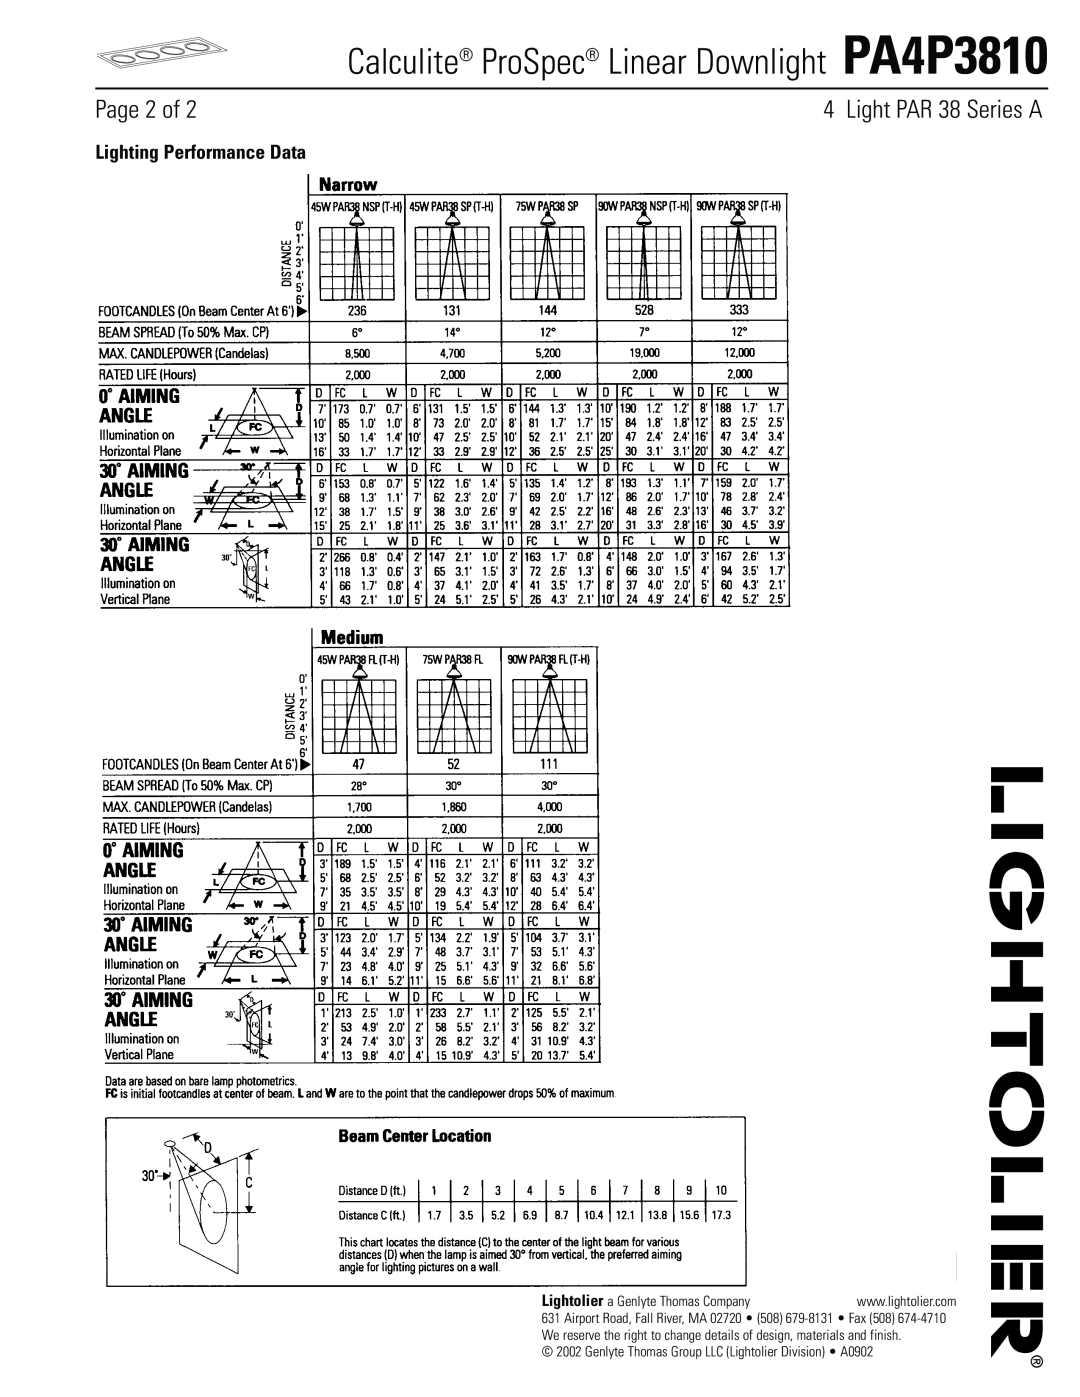 Lightolier Page 2 of, Lighting Performance Data, Calculite ProSpec Linear Downlight PA4P3810, Light PAR 38 Series A 